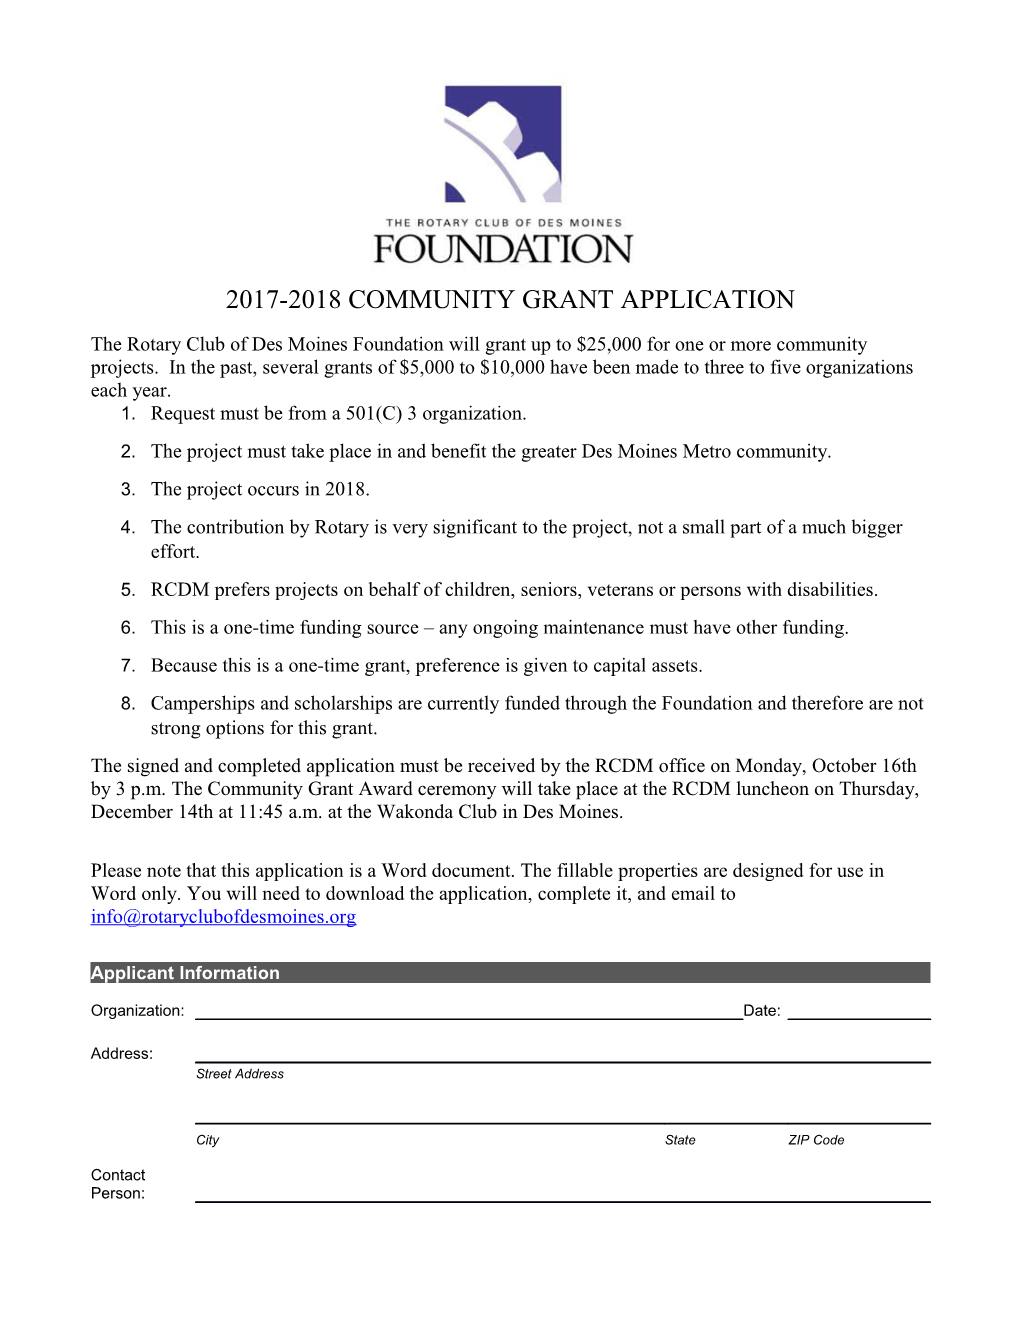 2017-2018Rcdm Foundation Community Grant Application